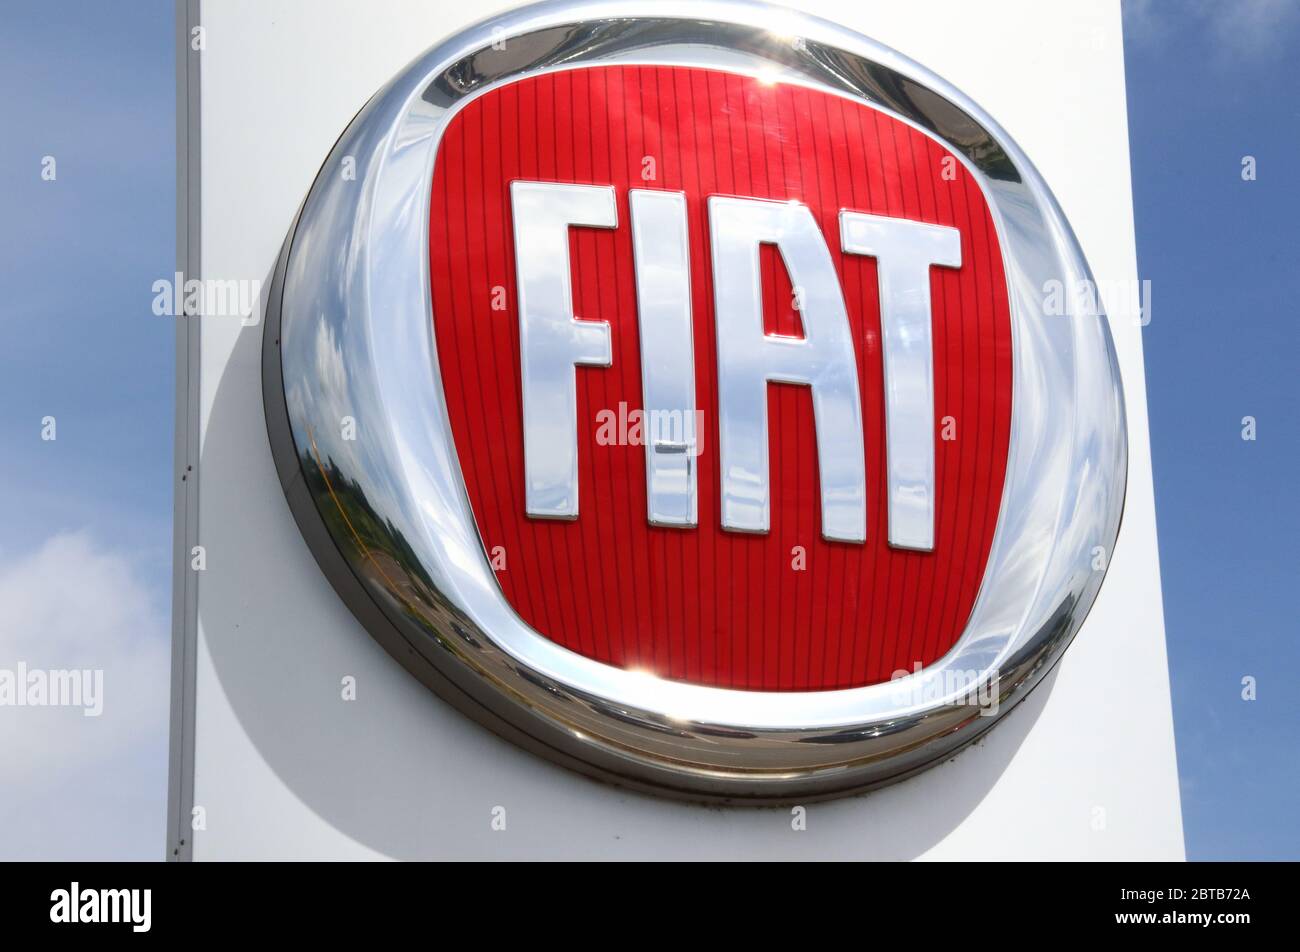 London, UK. 23rd May, 2020. Fiat motor company logo seen at a car dealership. Credit: Keith Mayhew/SOPA Images/ZUMA Wire/Alamy Live News Stock Photo